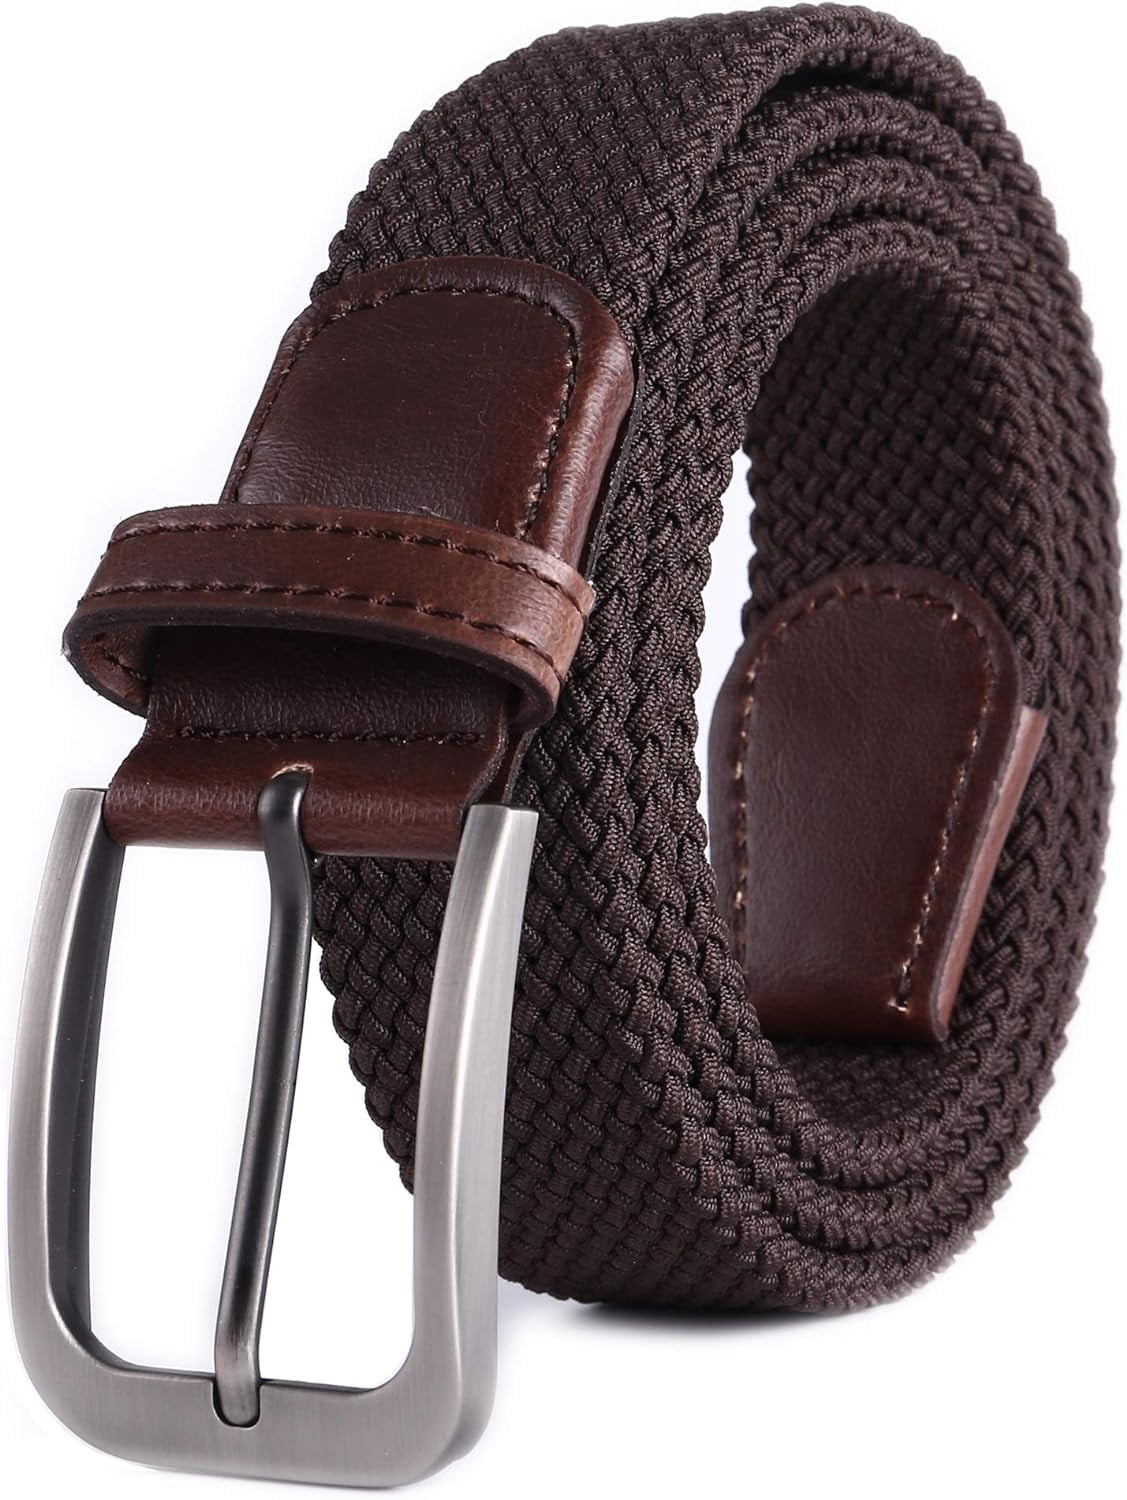 rt Belt for Men Braided Stretch Belt/No Holes Elastic Fabric Woven ...